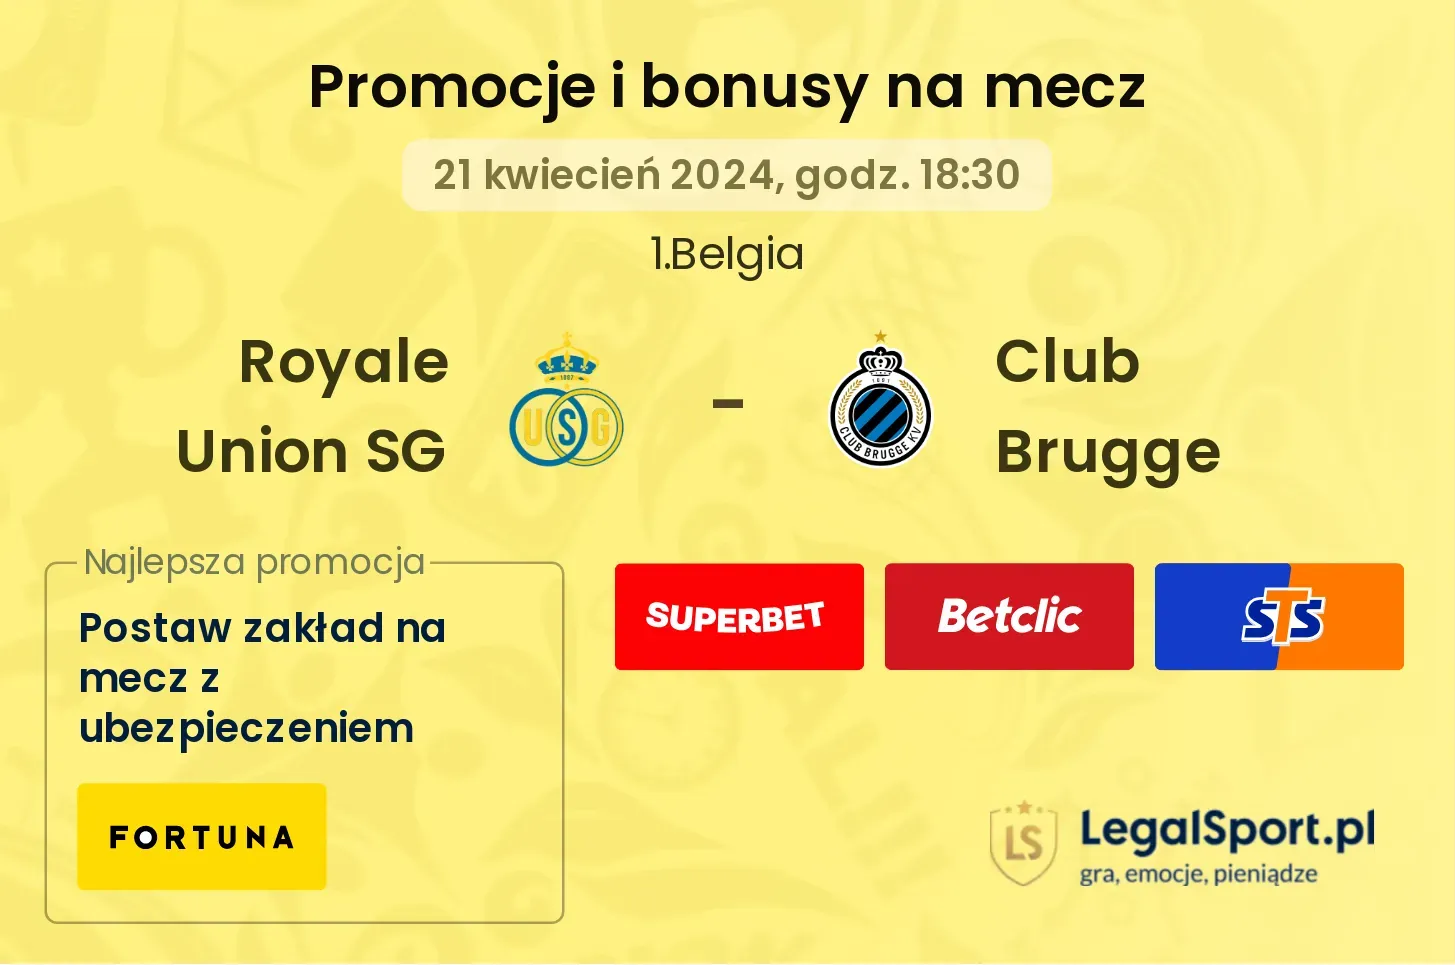 Royale Union SG - Club Brugge promocje bonusy na mecz